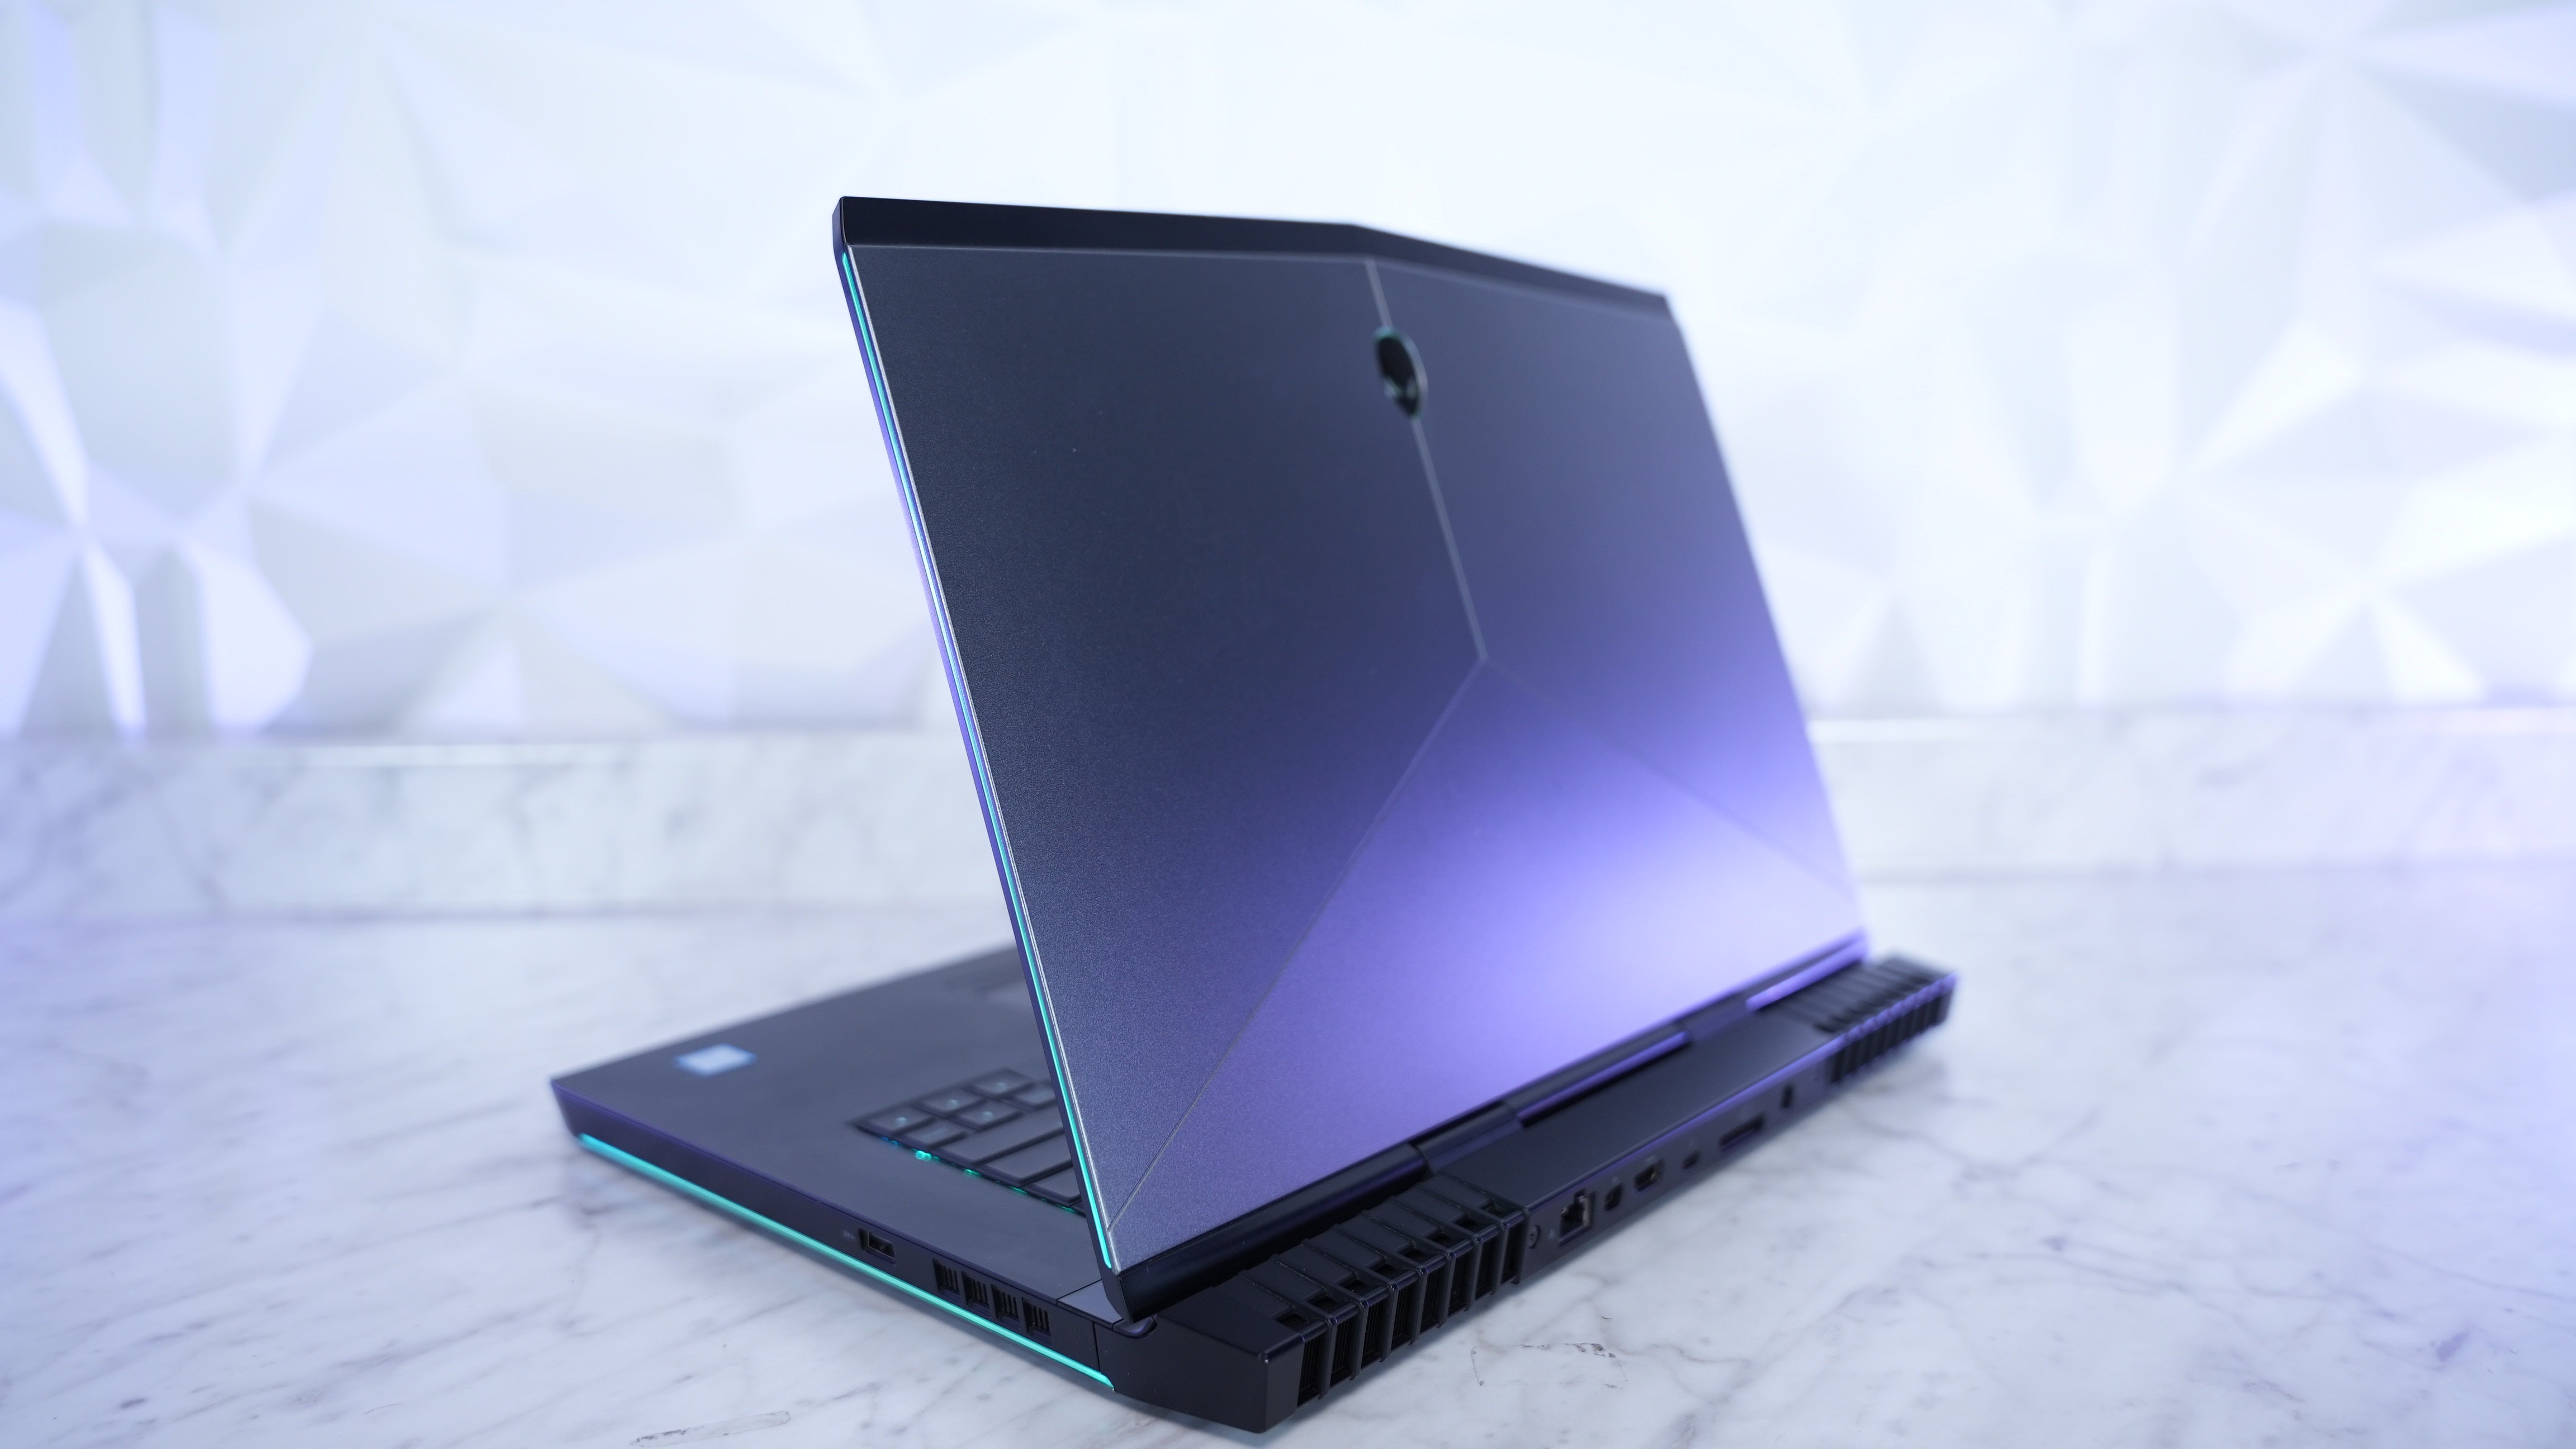 Alienware 15 R3 - Intel i7 7700HQ + GTX 1070 Gaming Laptop (In Stock)